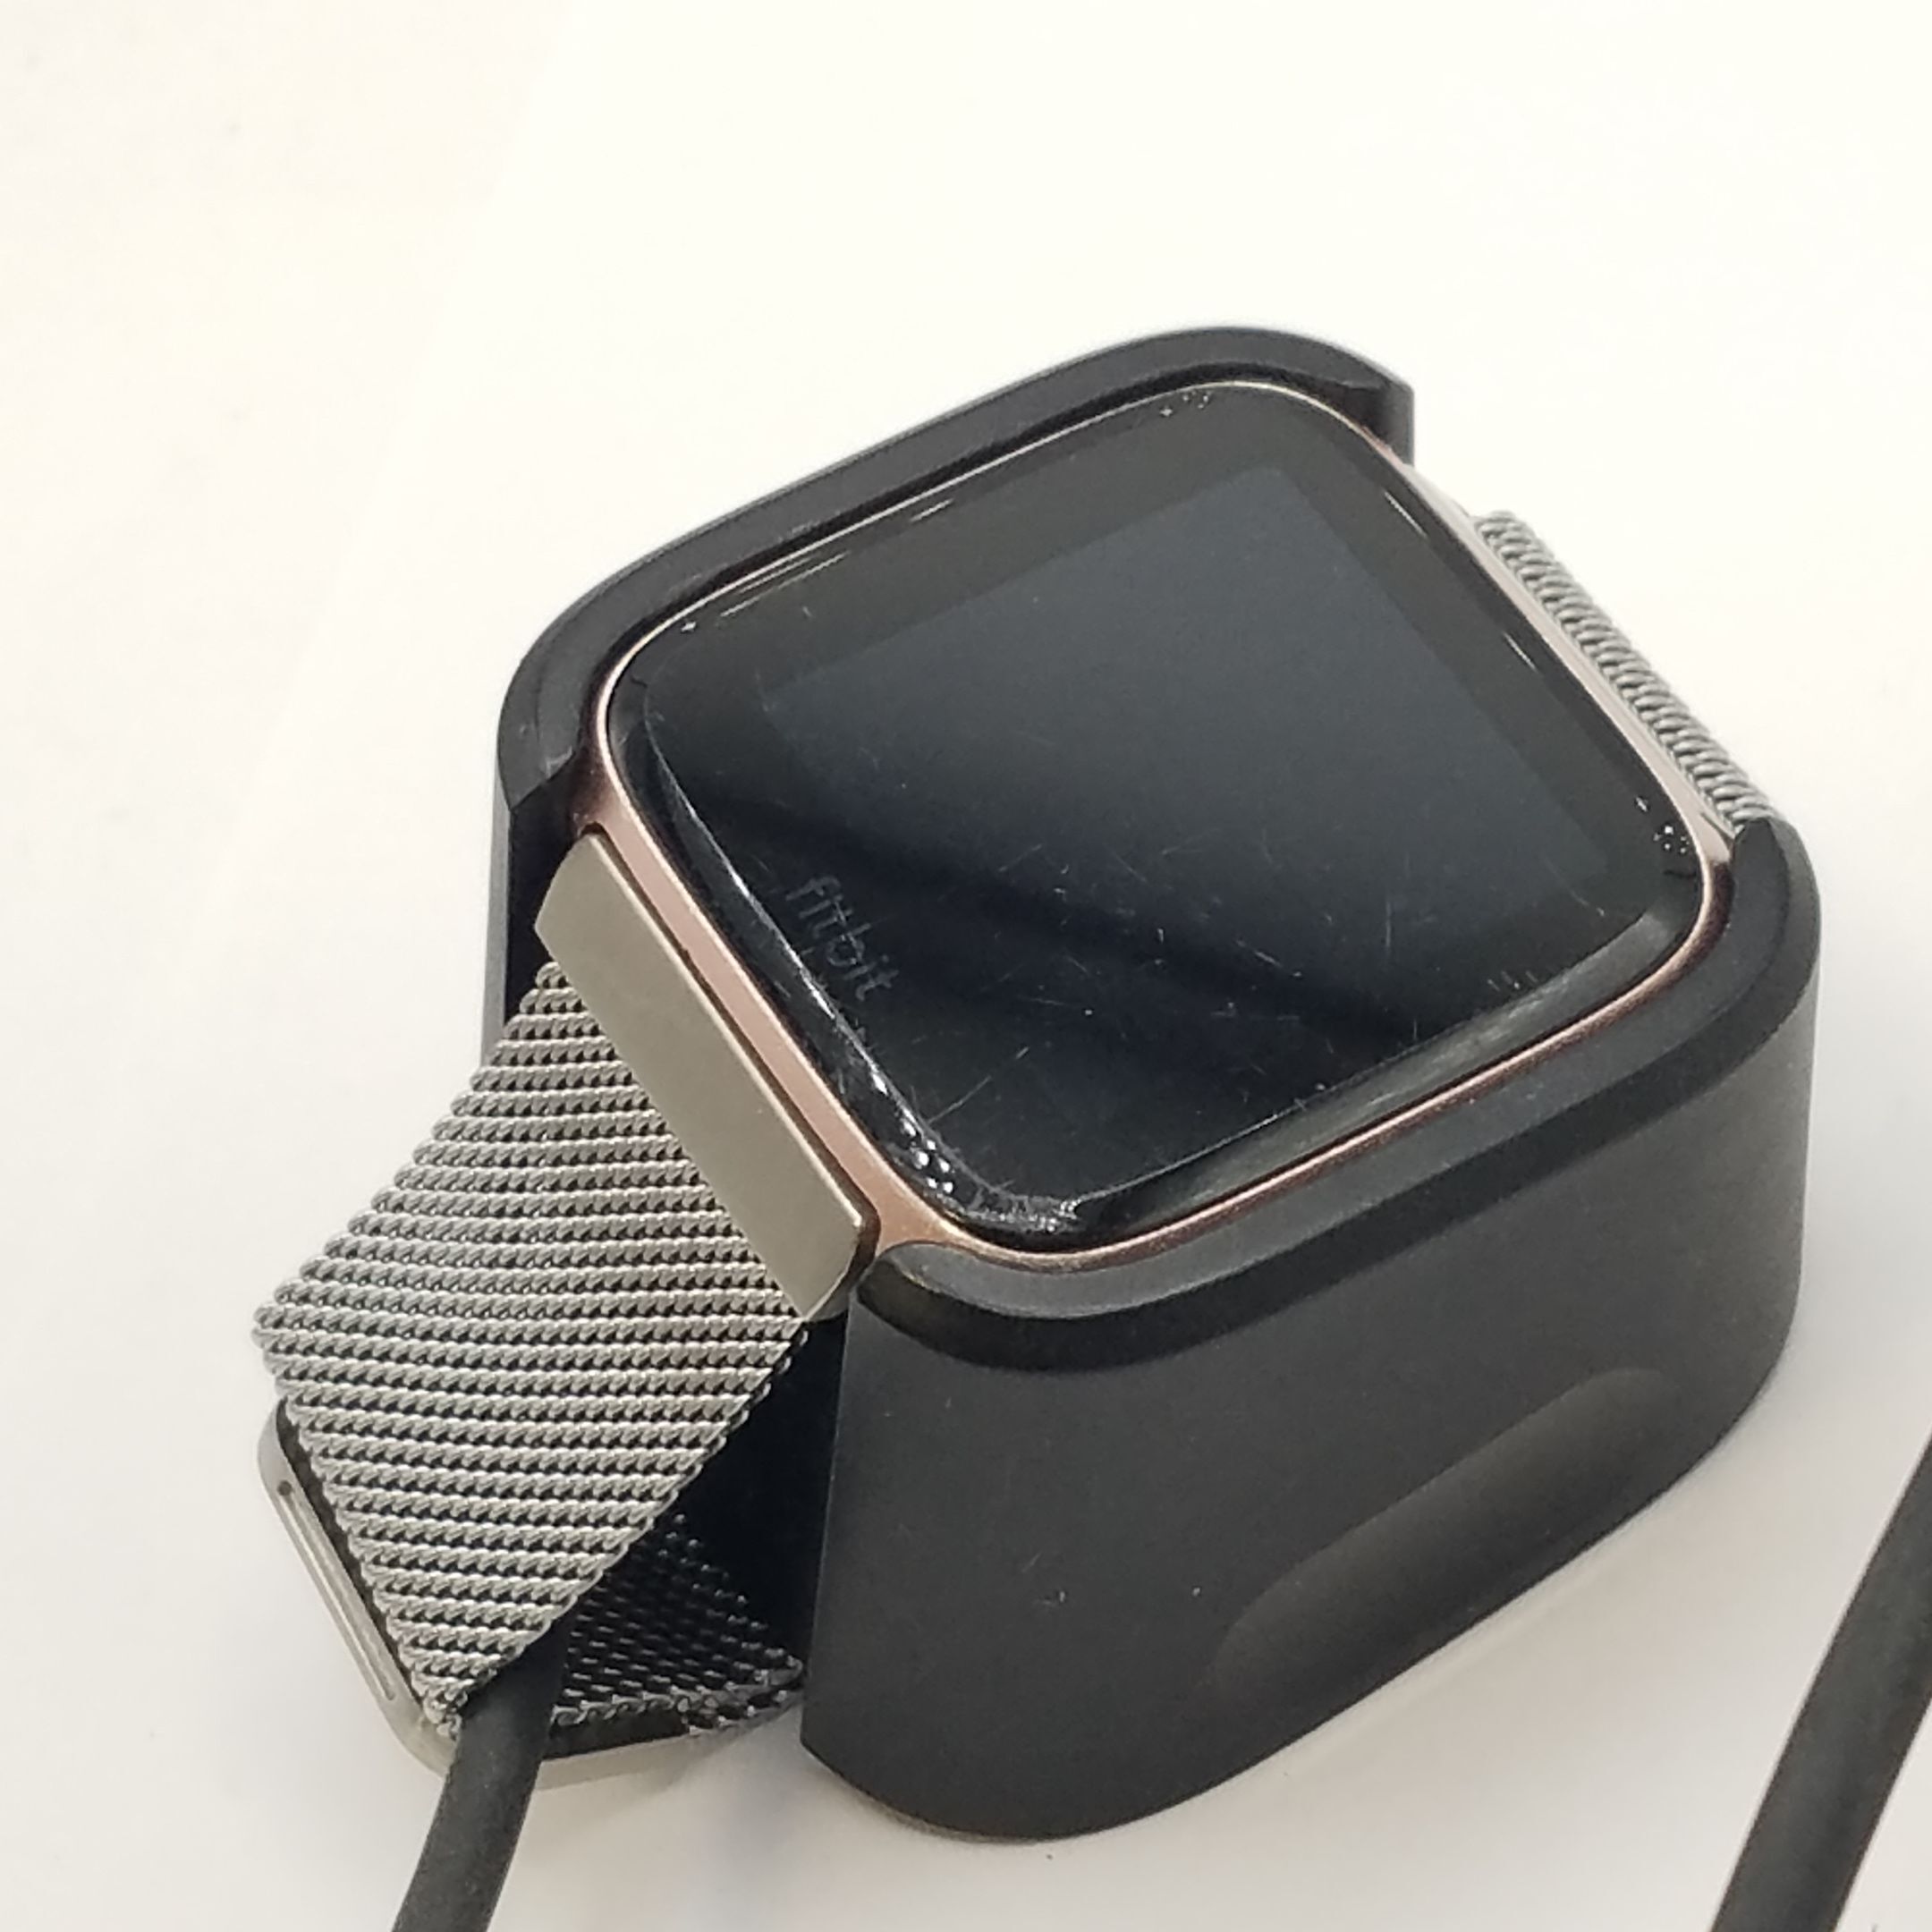 Everyday Bracelet For Fitbit Inspire 3 | StrapsCo